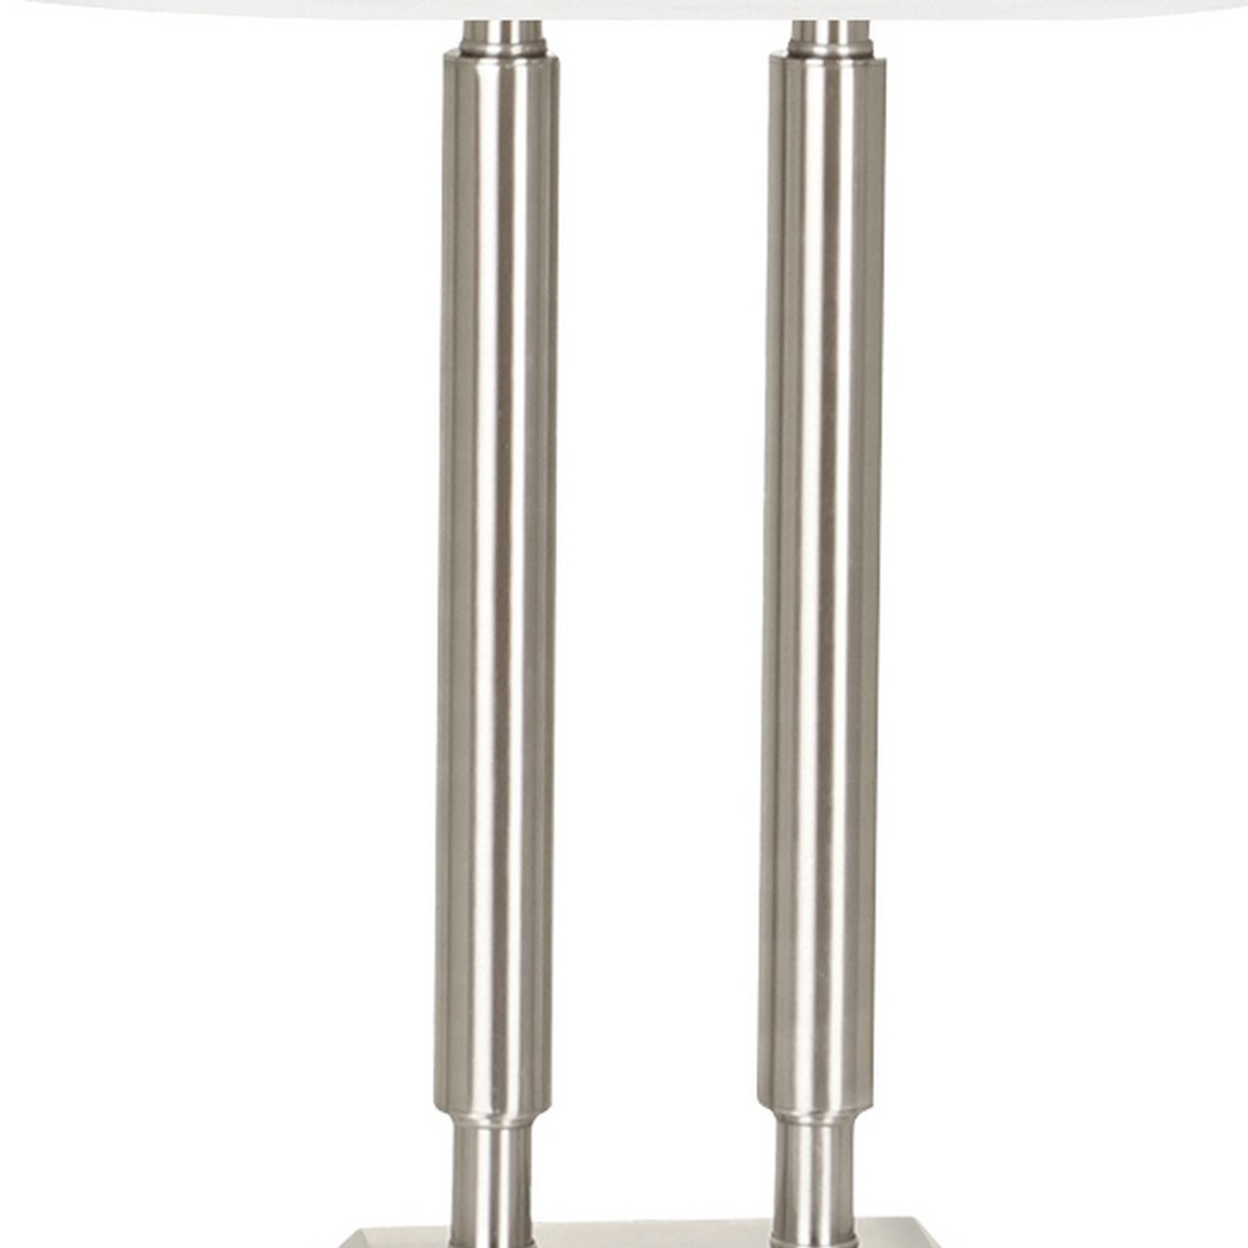 120 Watt Table Lamp With Fabric Drum Shade, Silver And White- Saltoro Sherpi